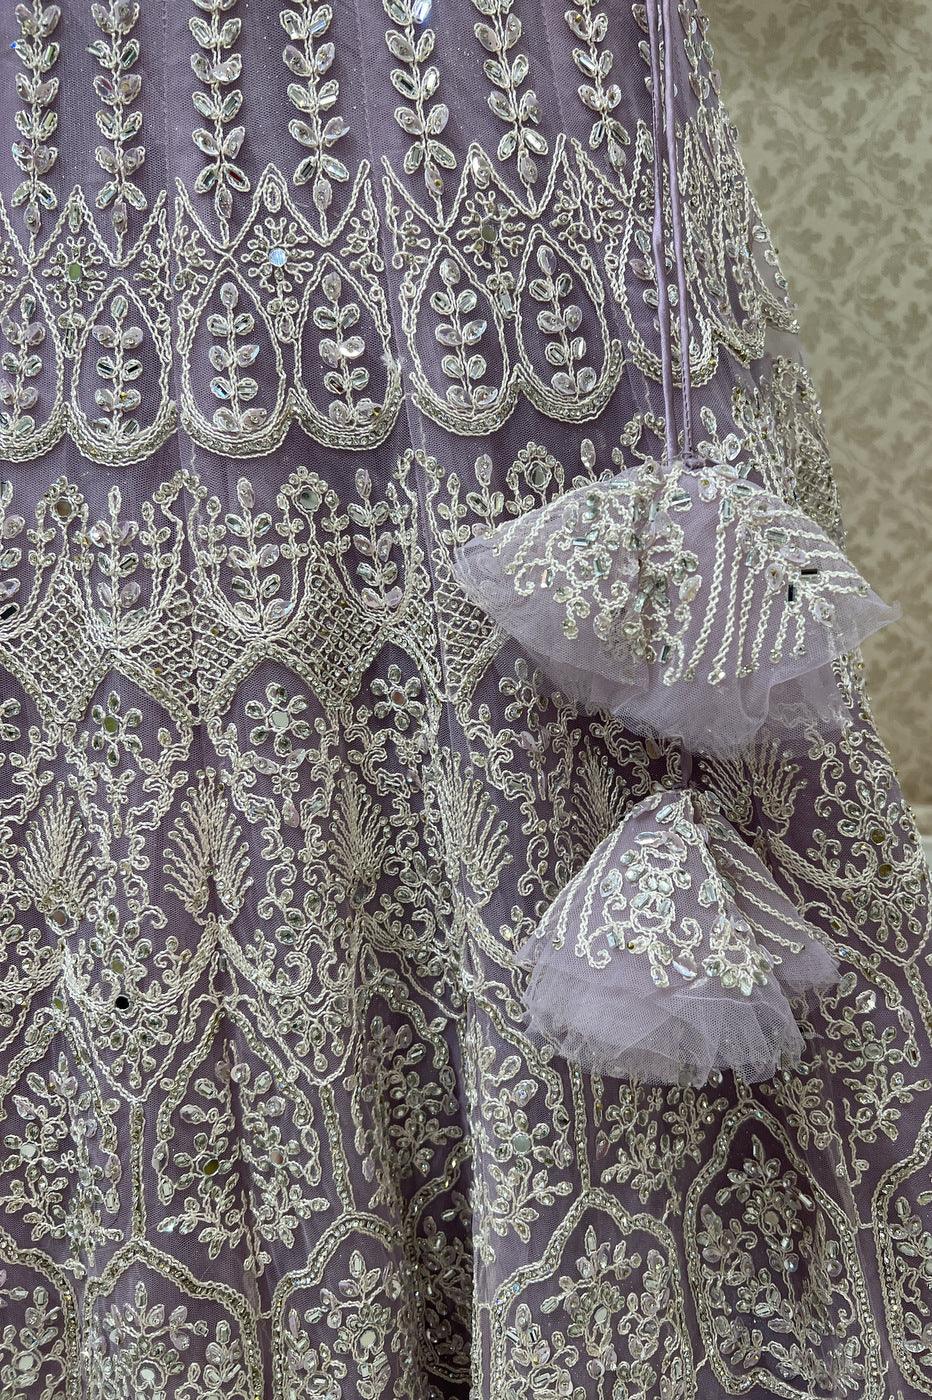 Light Lavender Thread, Stone and Mirror work Crop Top Designer Bridal Lehenga - Seasons Chennai